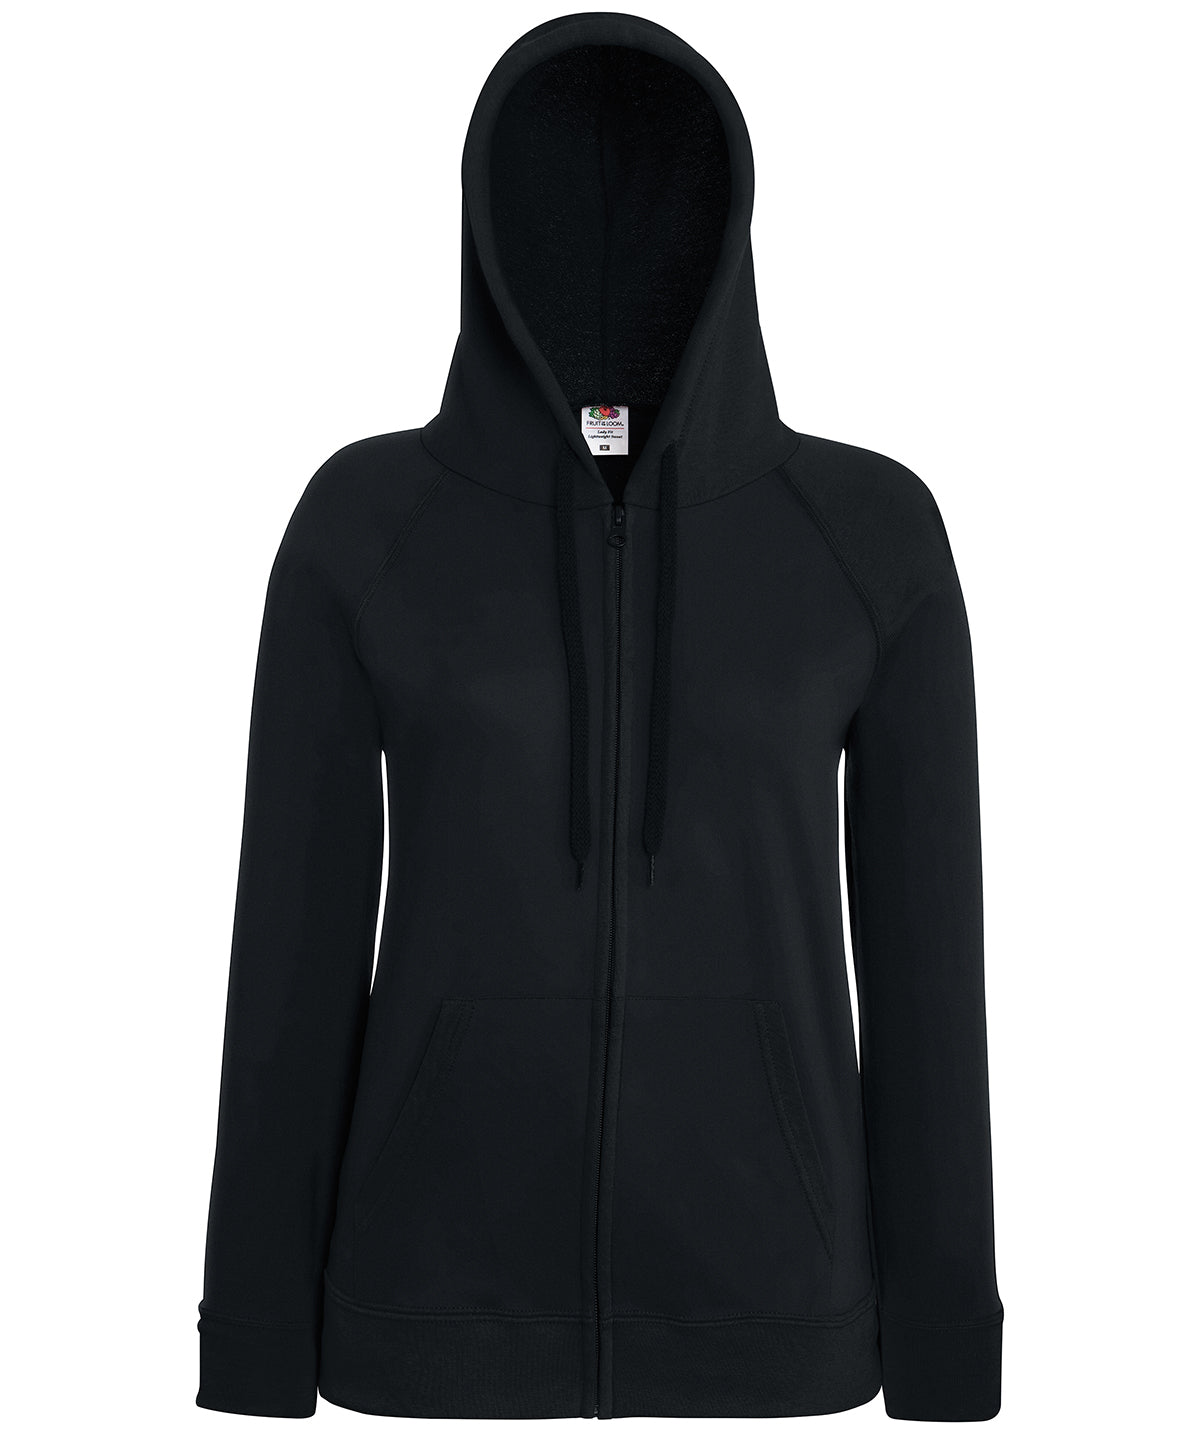 Womens lightweight hooded sweatshirt jacket | Black